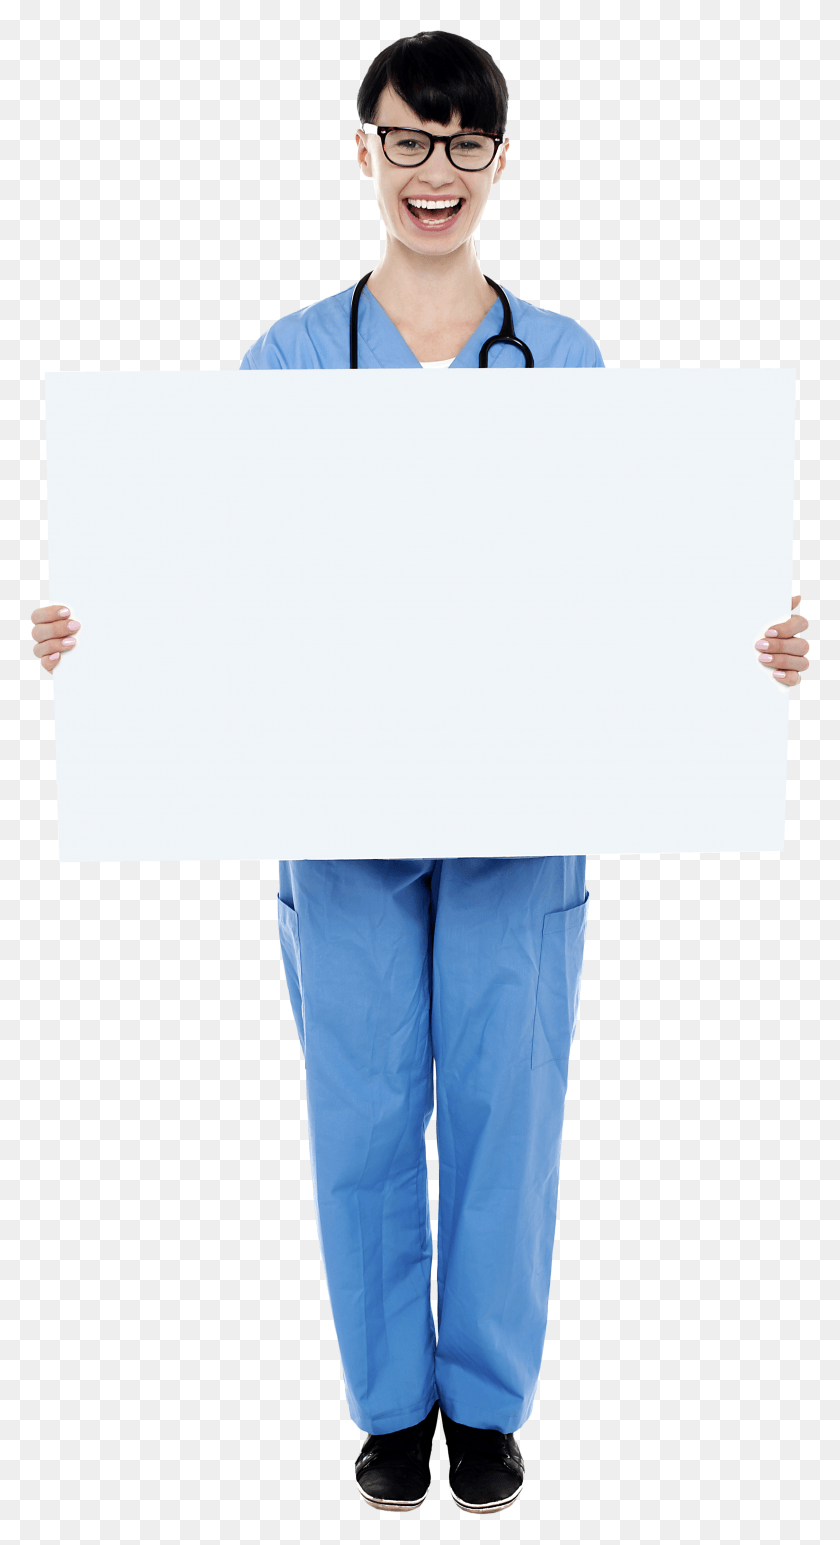 2427x4622 Doctor Holding Banner Image De Dibujos Animados, Persona, Humano, De Pie Hd Png